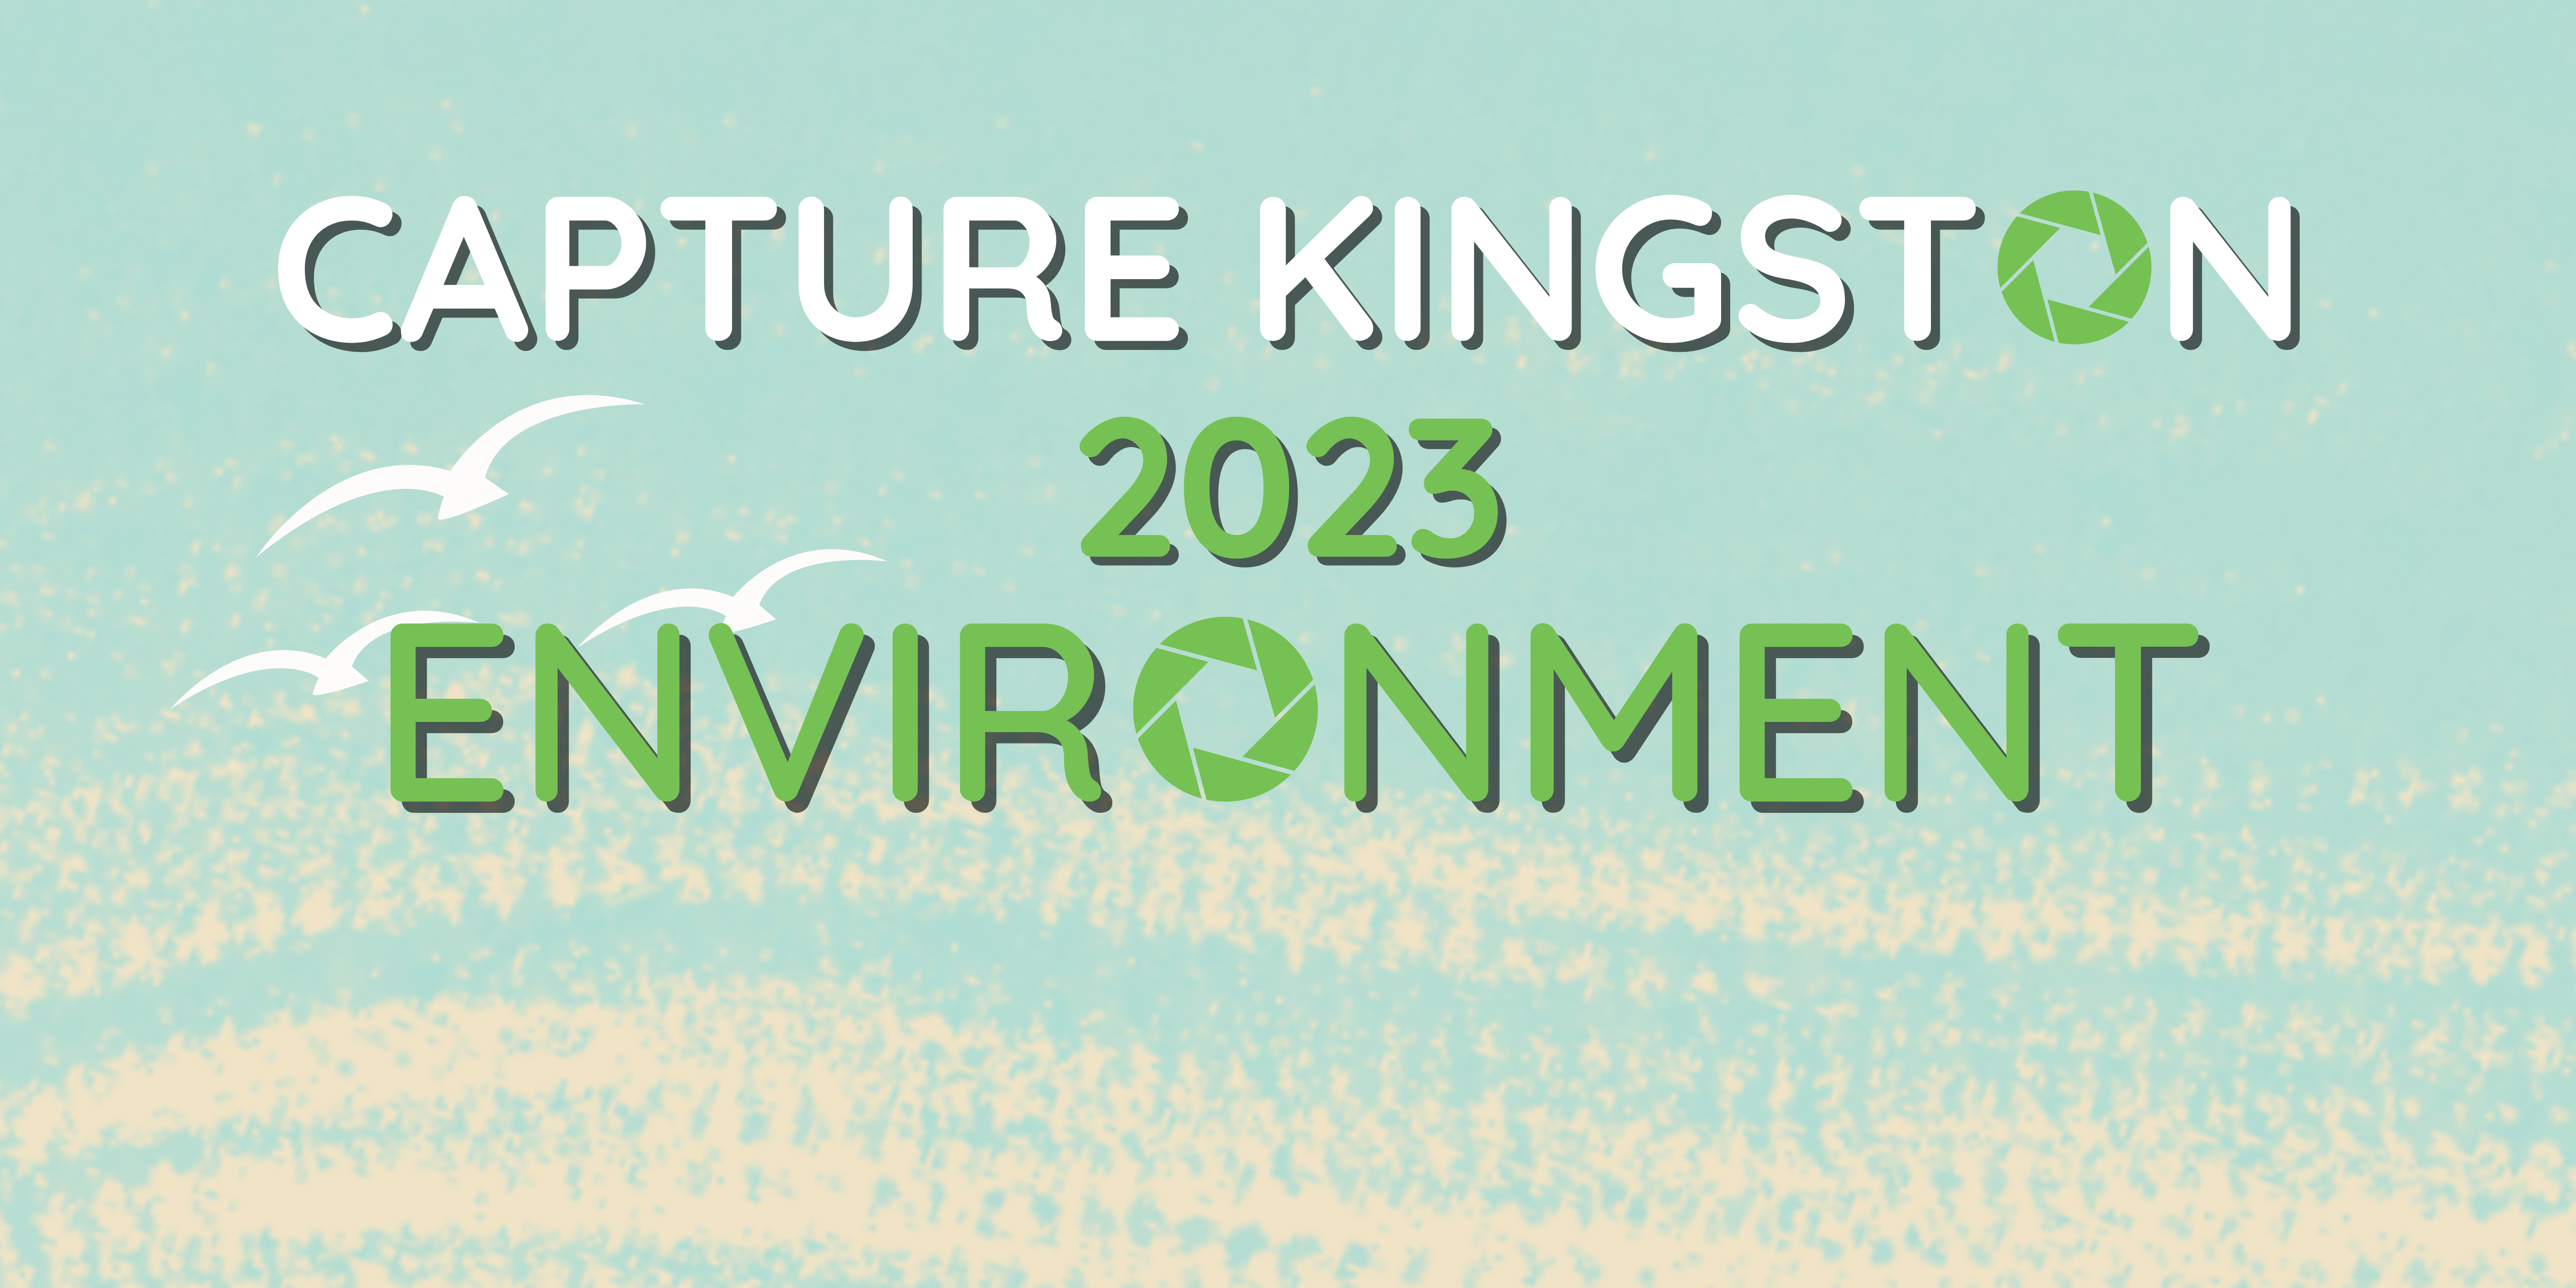 Capture Kingston 2023 Environment